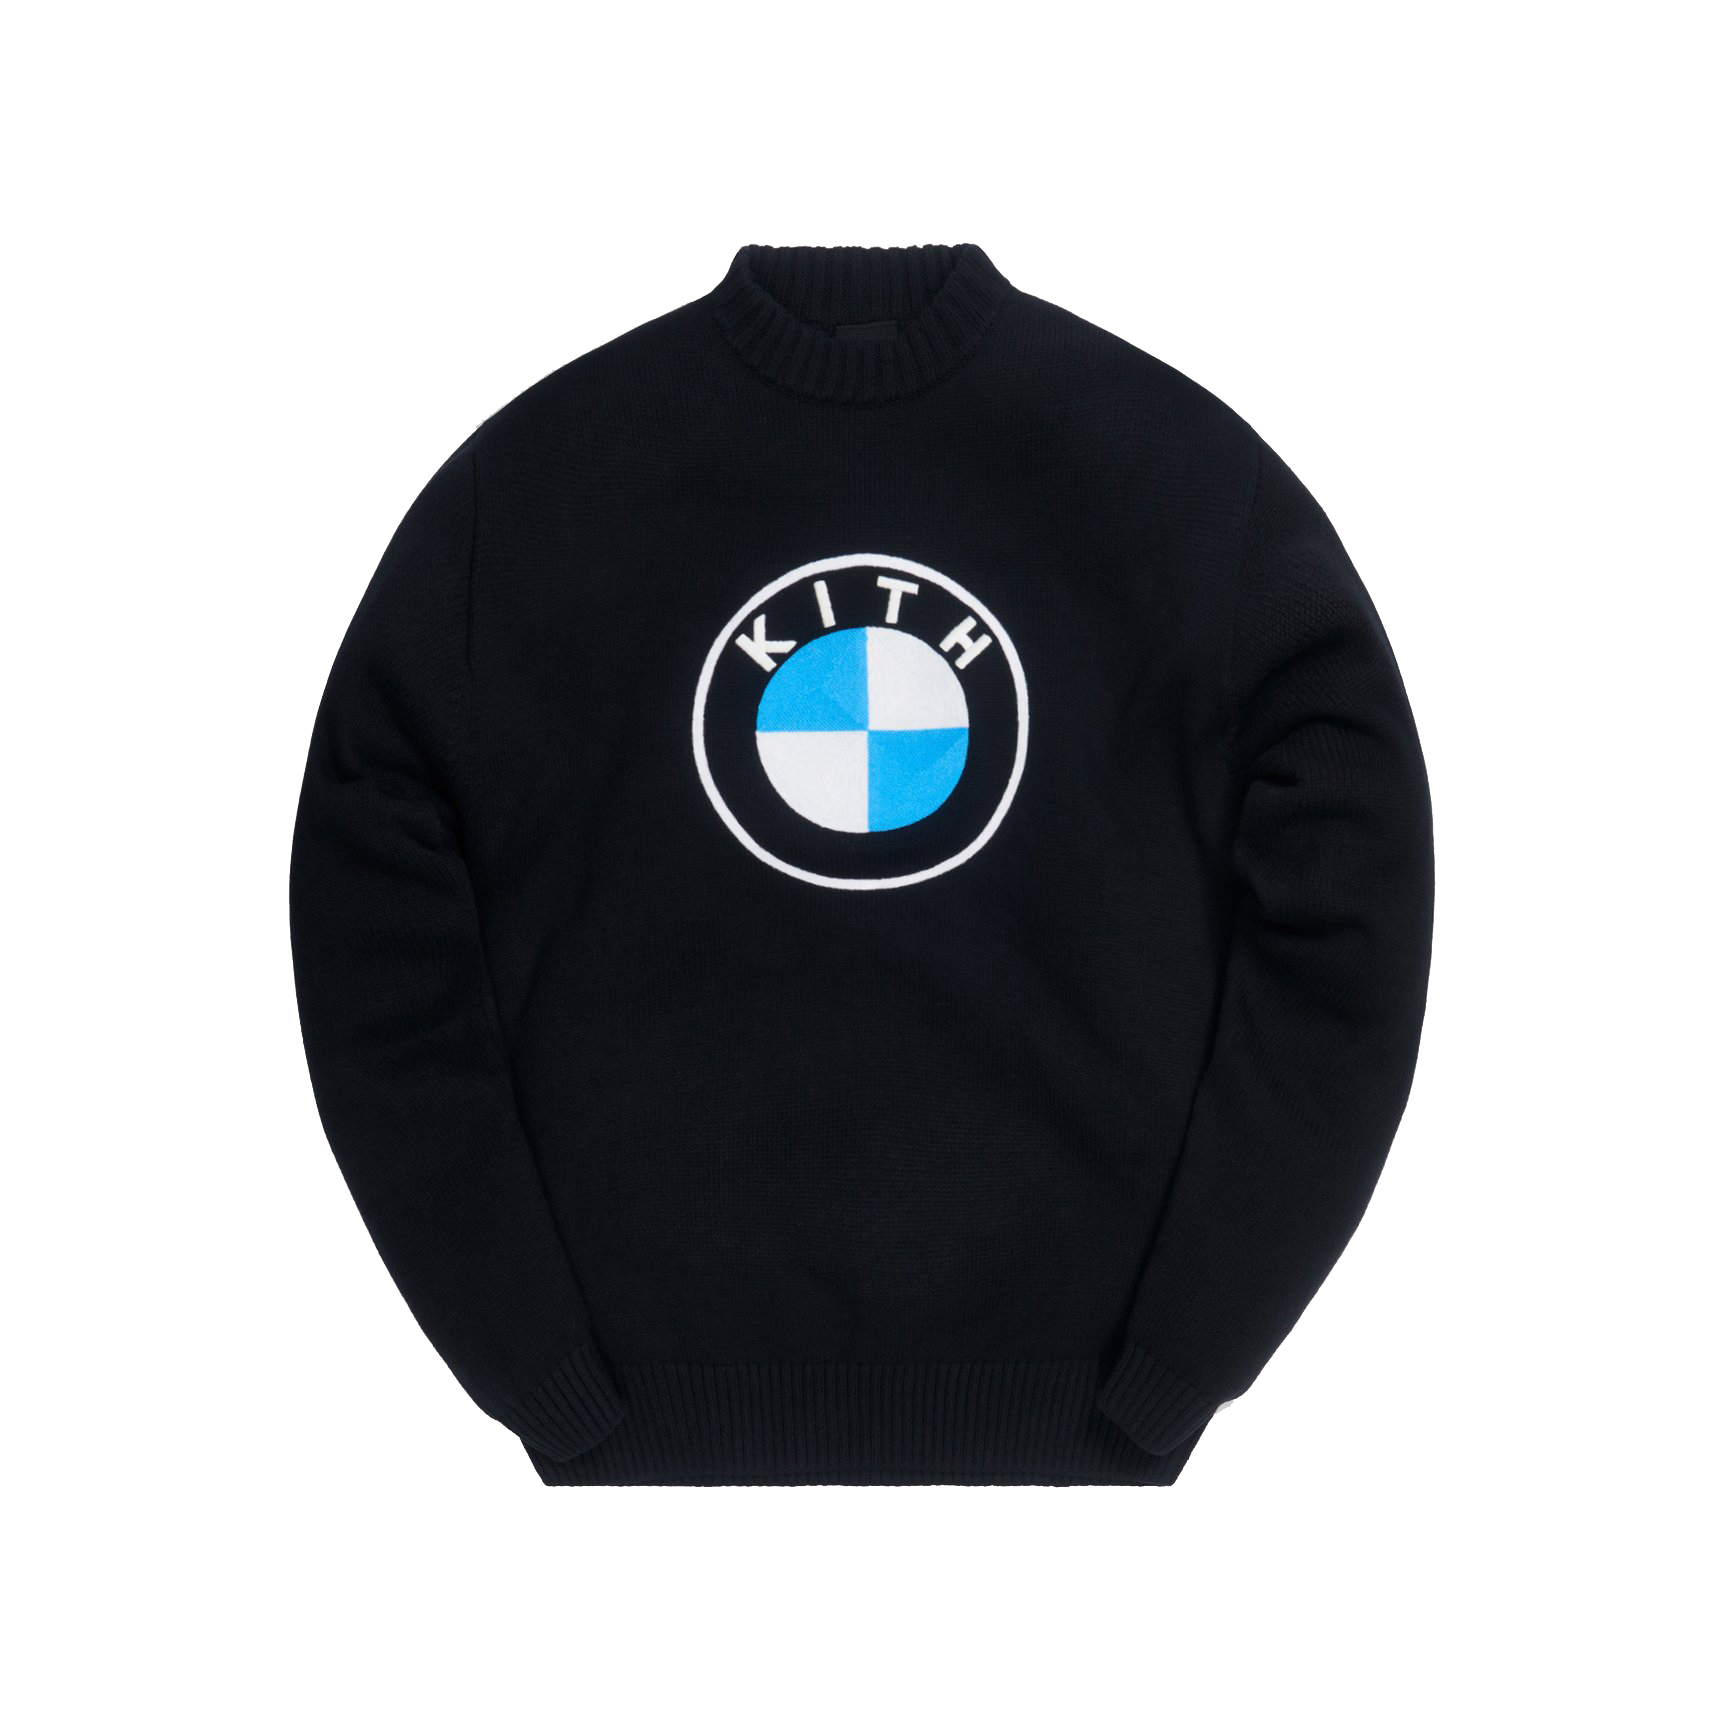 Kith x BMW Roundel Sweater Black - FW20 - US